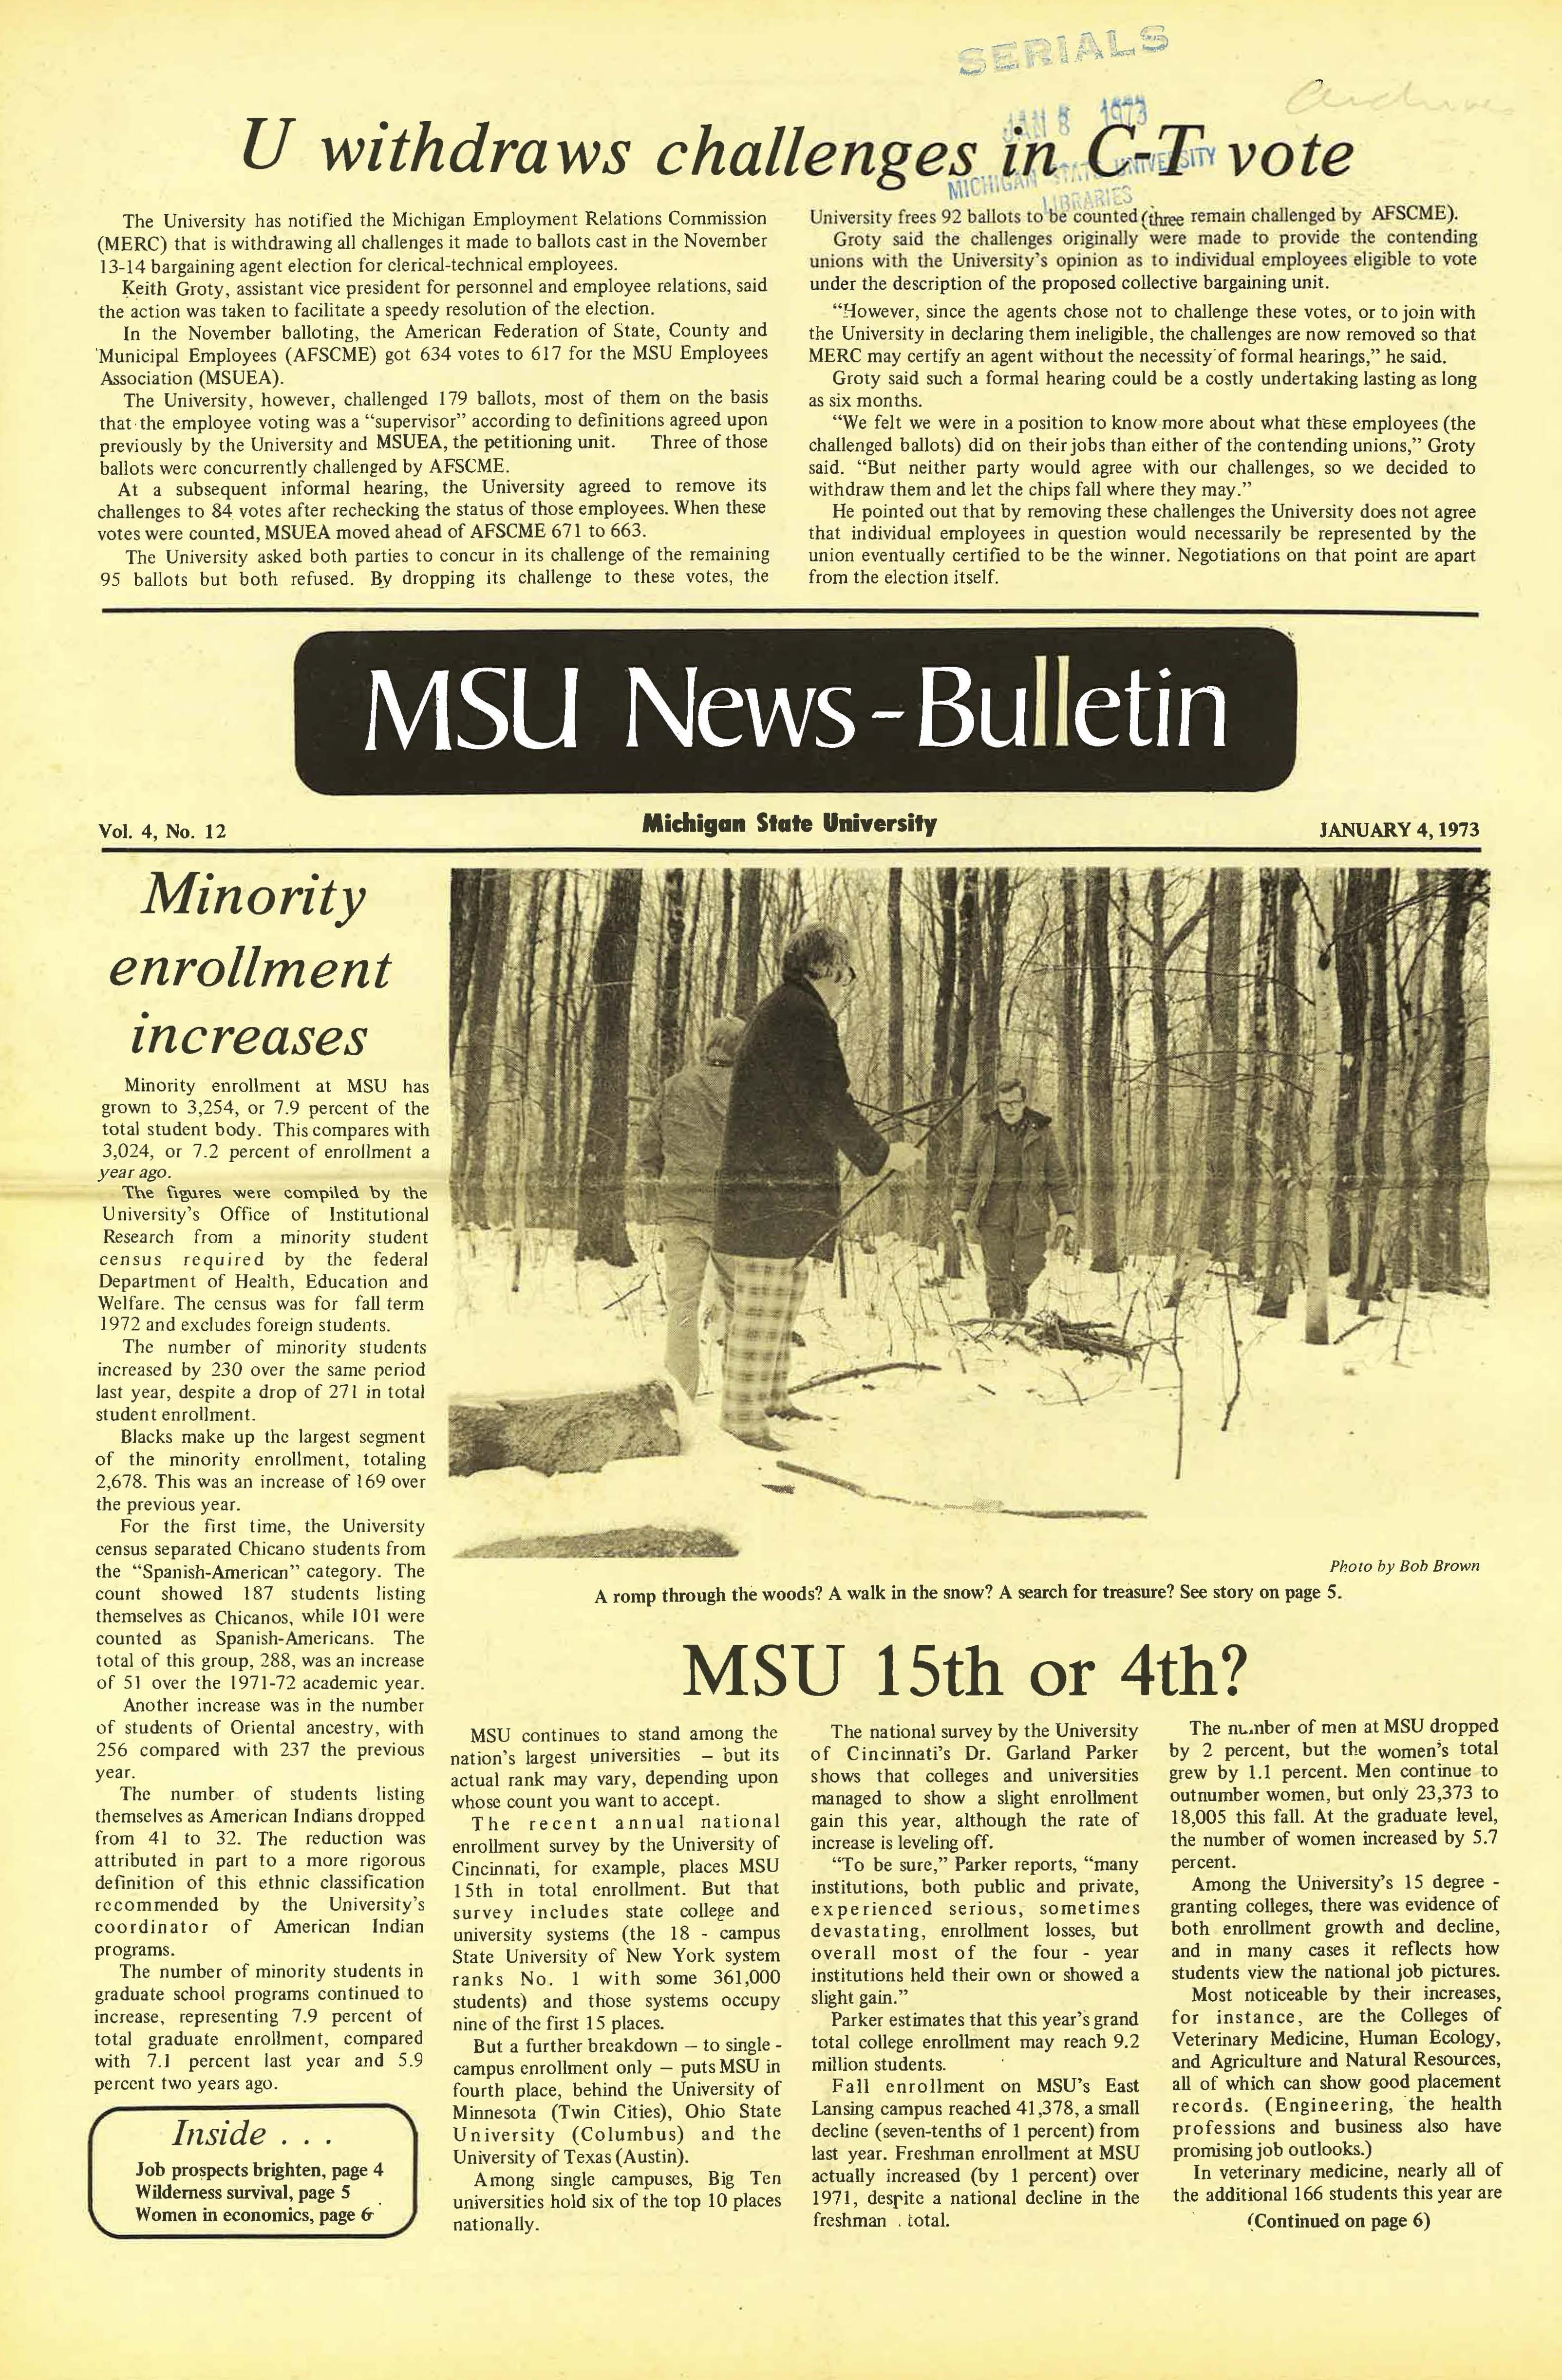 MSU News Bulletin, vol. 4, No. 18, February 15, 1973